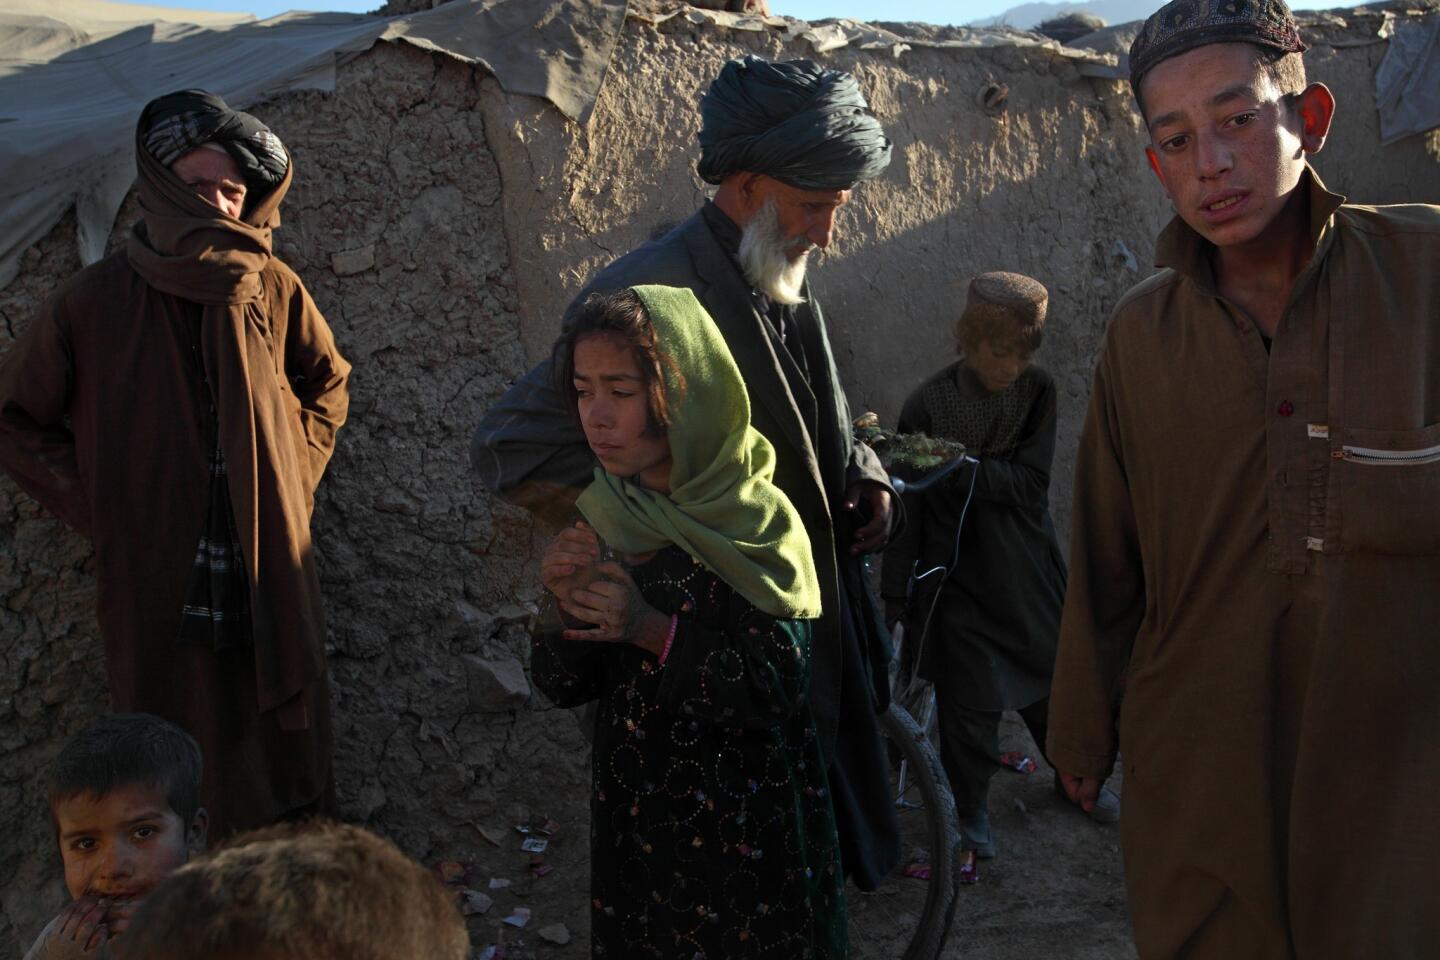 Displaced in Afghanistan